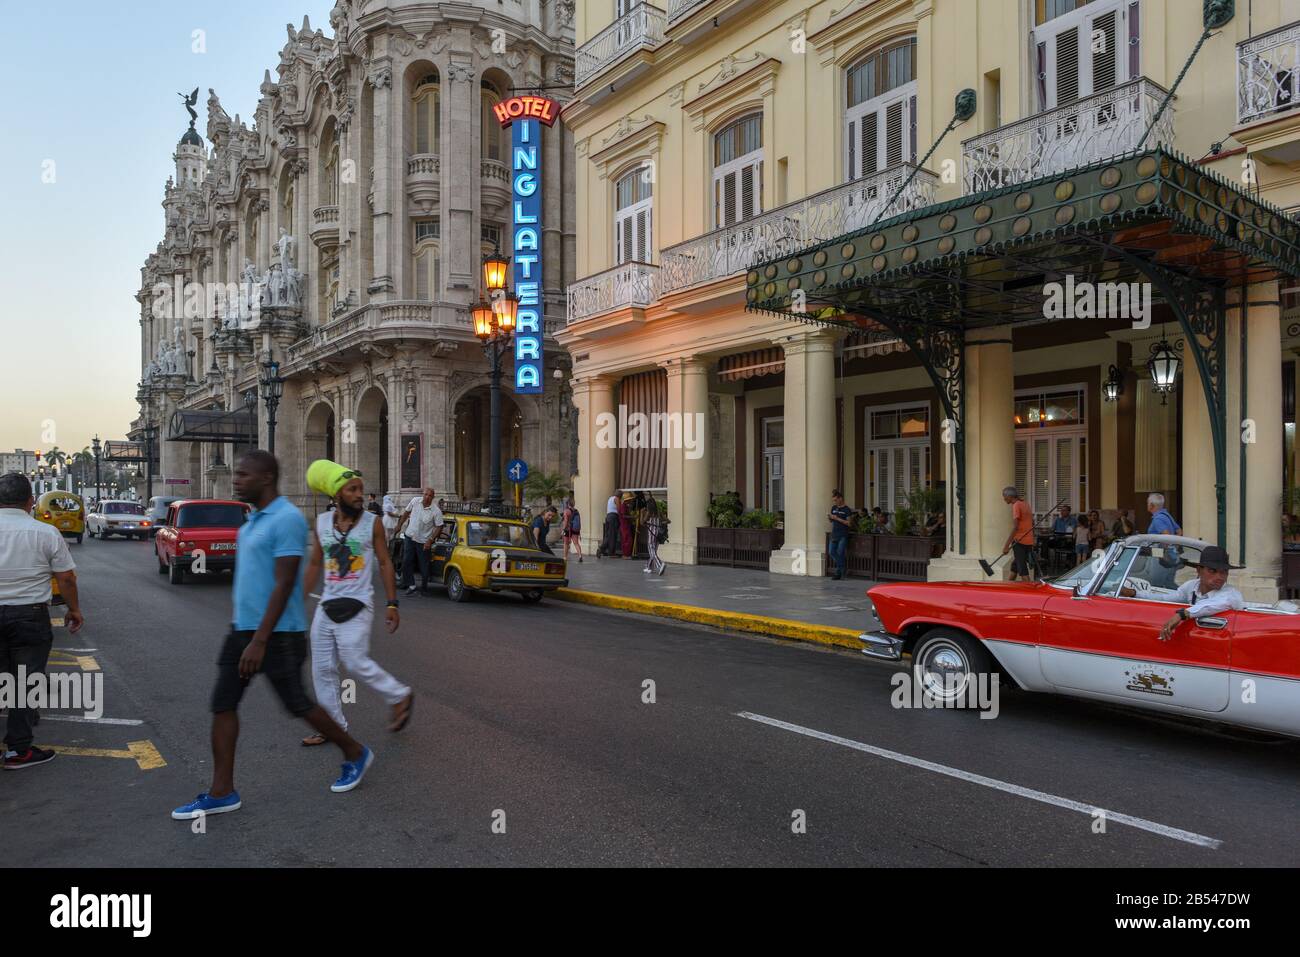 Inglaterra Hotel, Neon Sign, Havana, Cuba Stock Photo